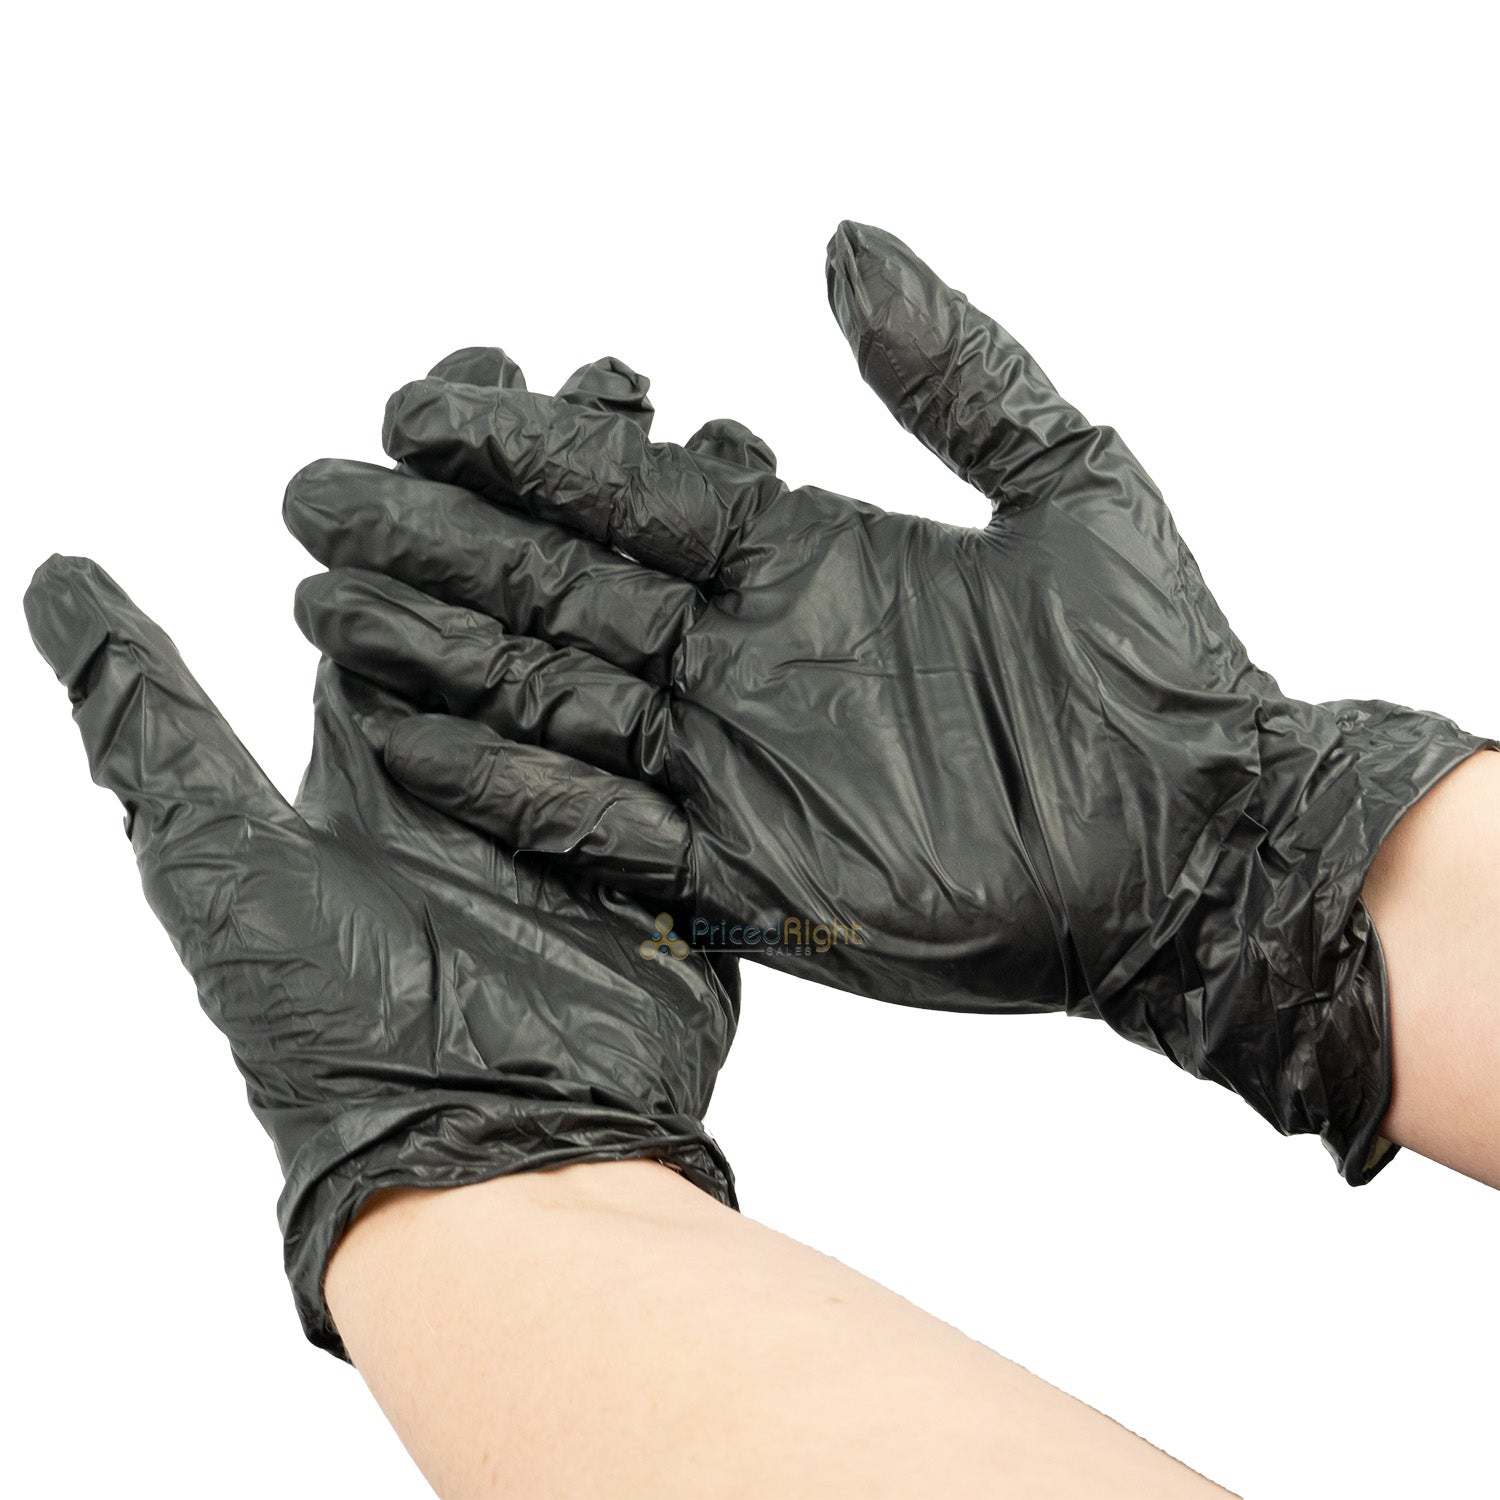 Black Nitrile Vinyl Gloves Disposable Powder Latex Free 3 Pack M L & XL 300 CT